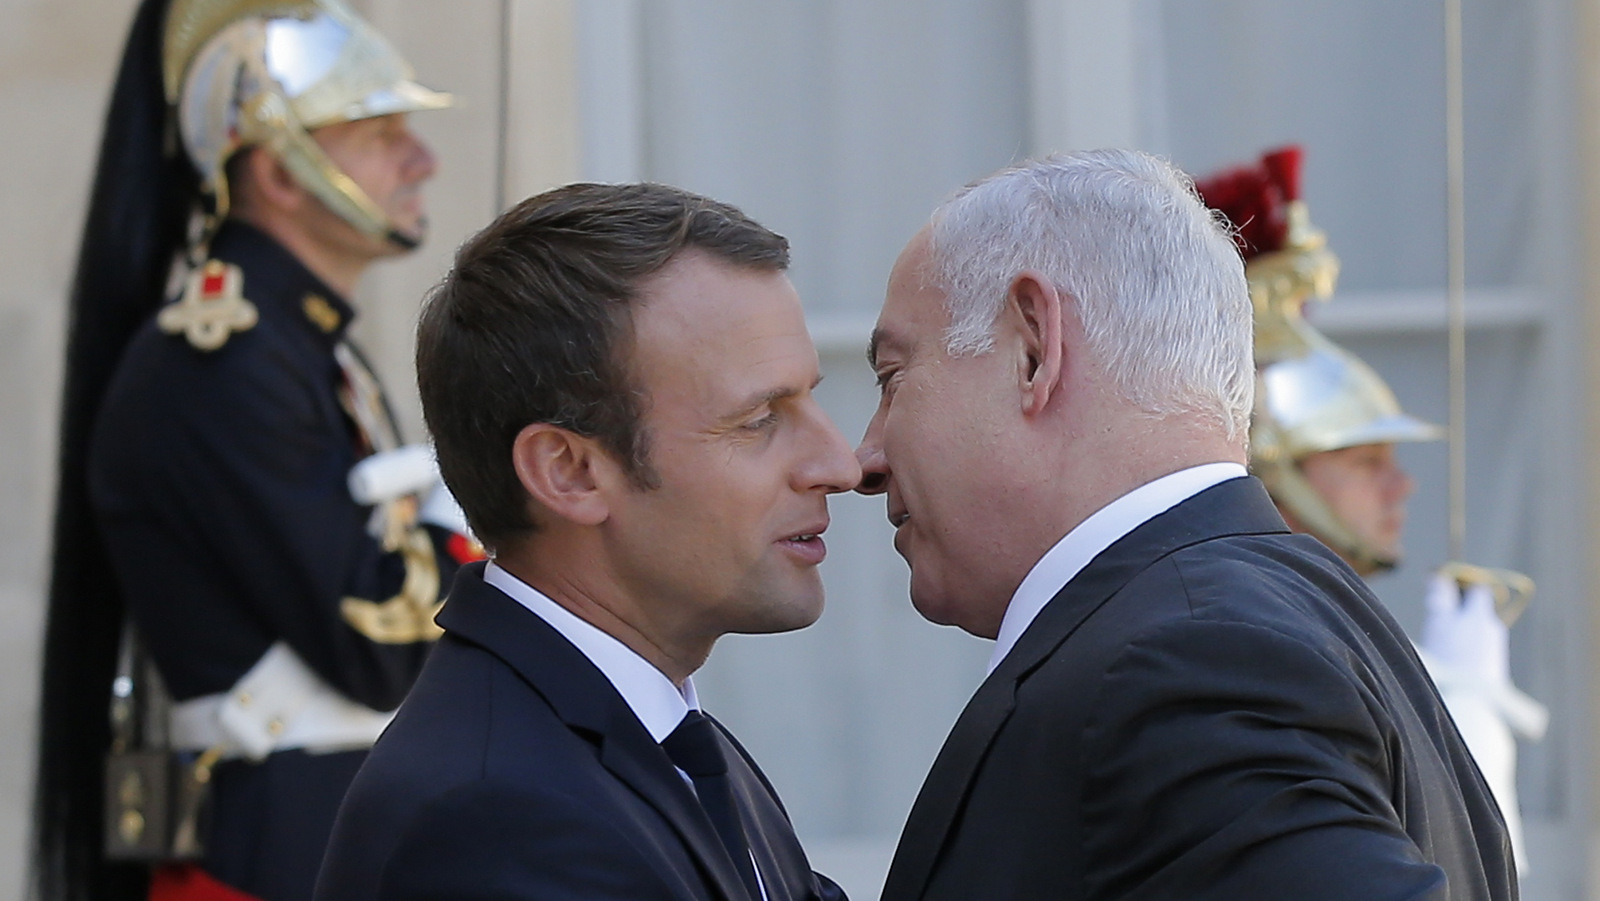 French President Emmanuel Macron, left, welcomes Israeli Prime Minister Benjamin Netanyahu at the Elysee Palace in Paris, France, July 16, 2017. (AP/Michel Euler)